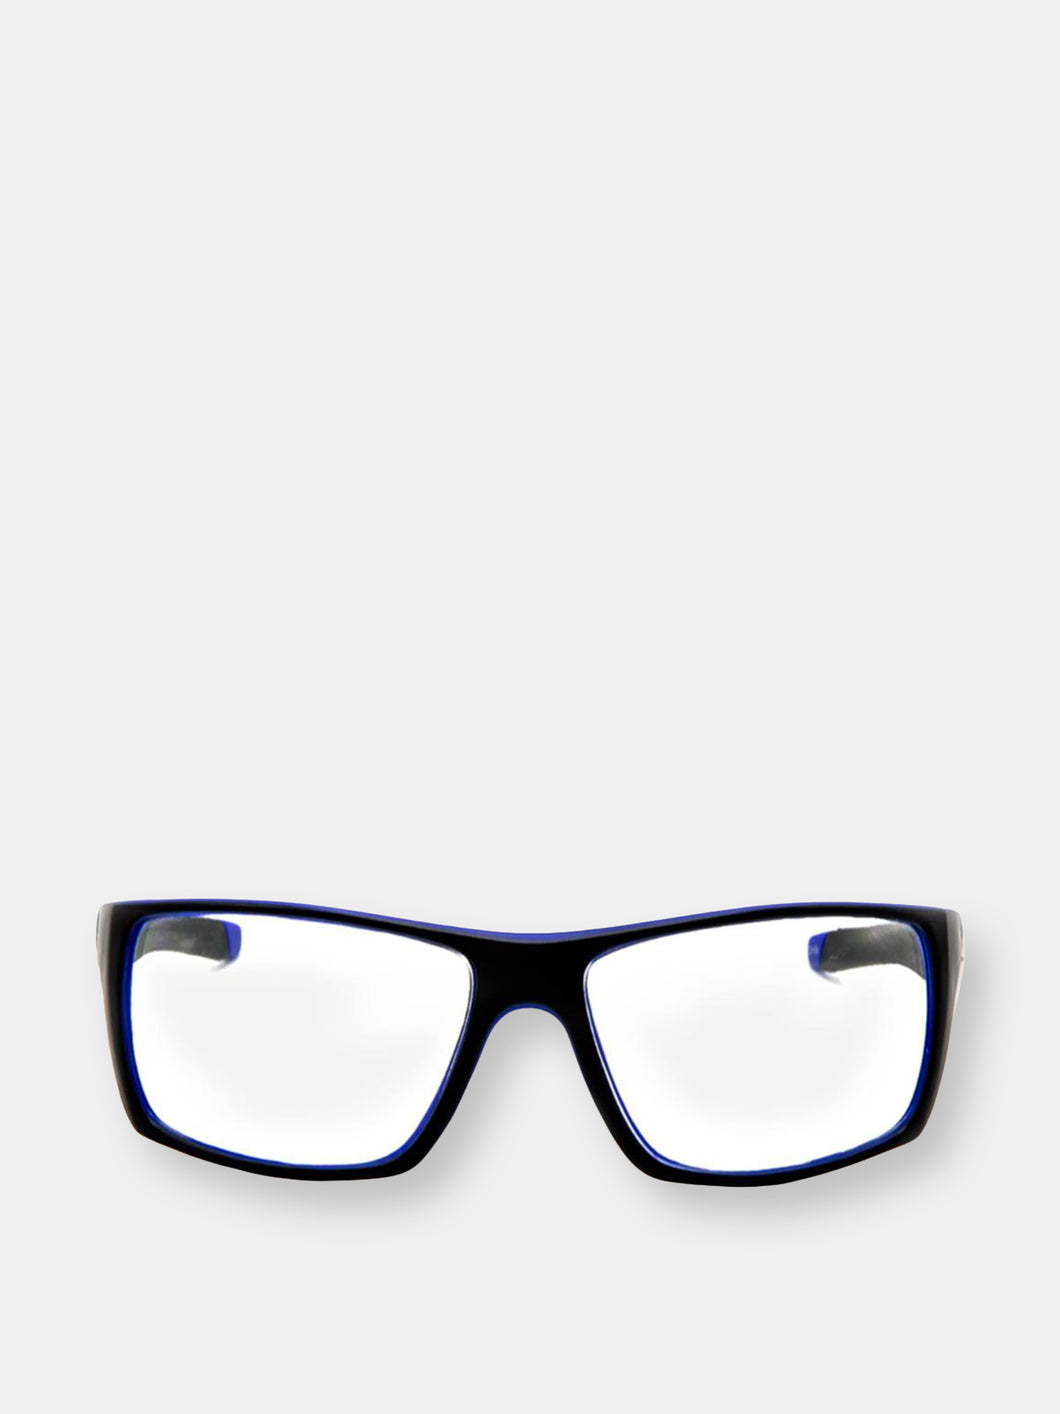 Palermo Bifocal Safety Glasses